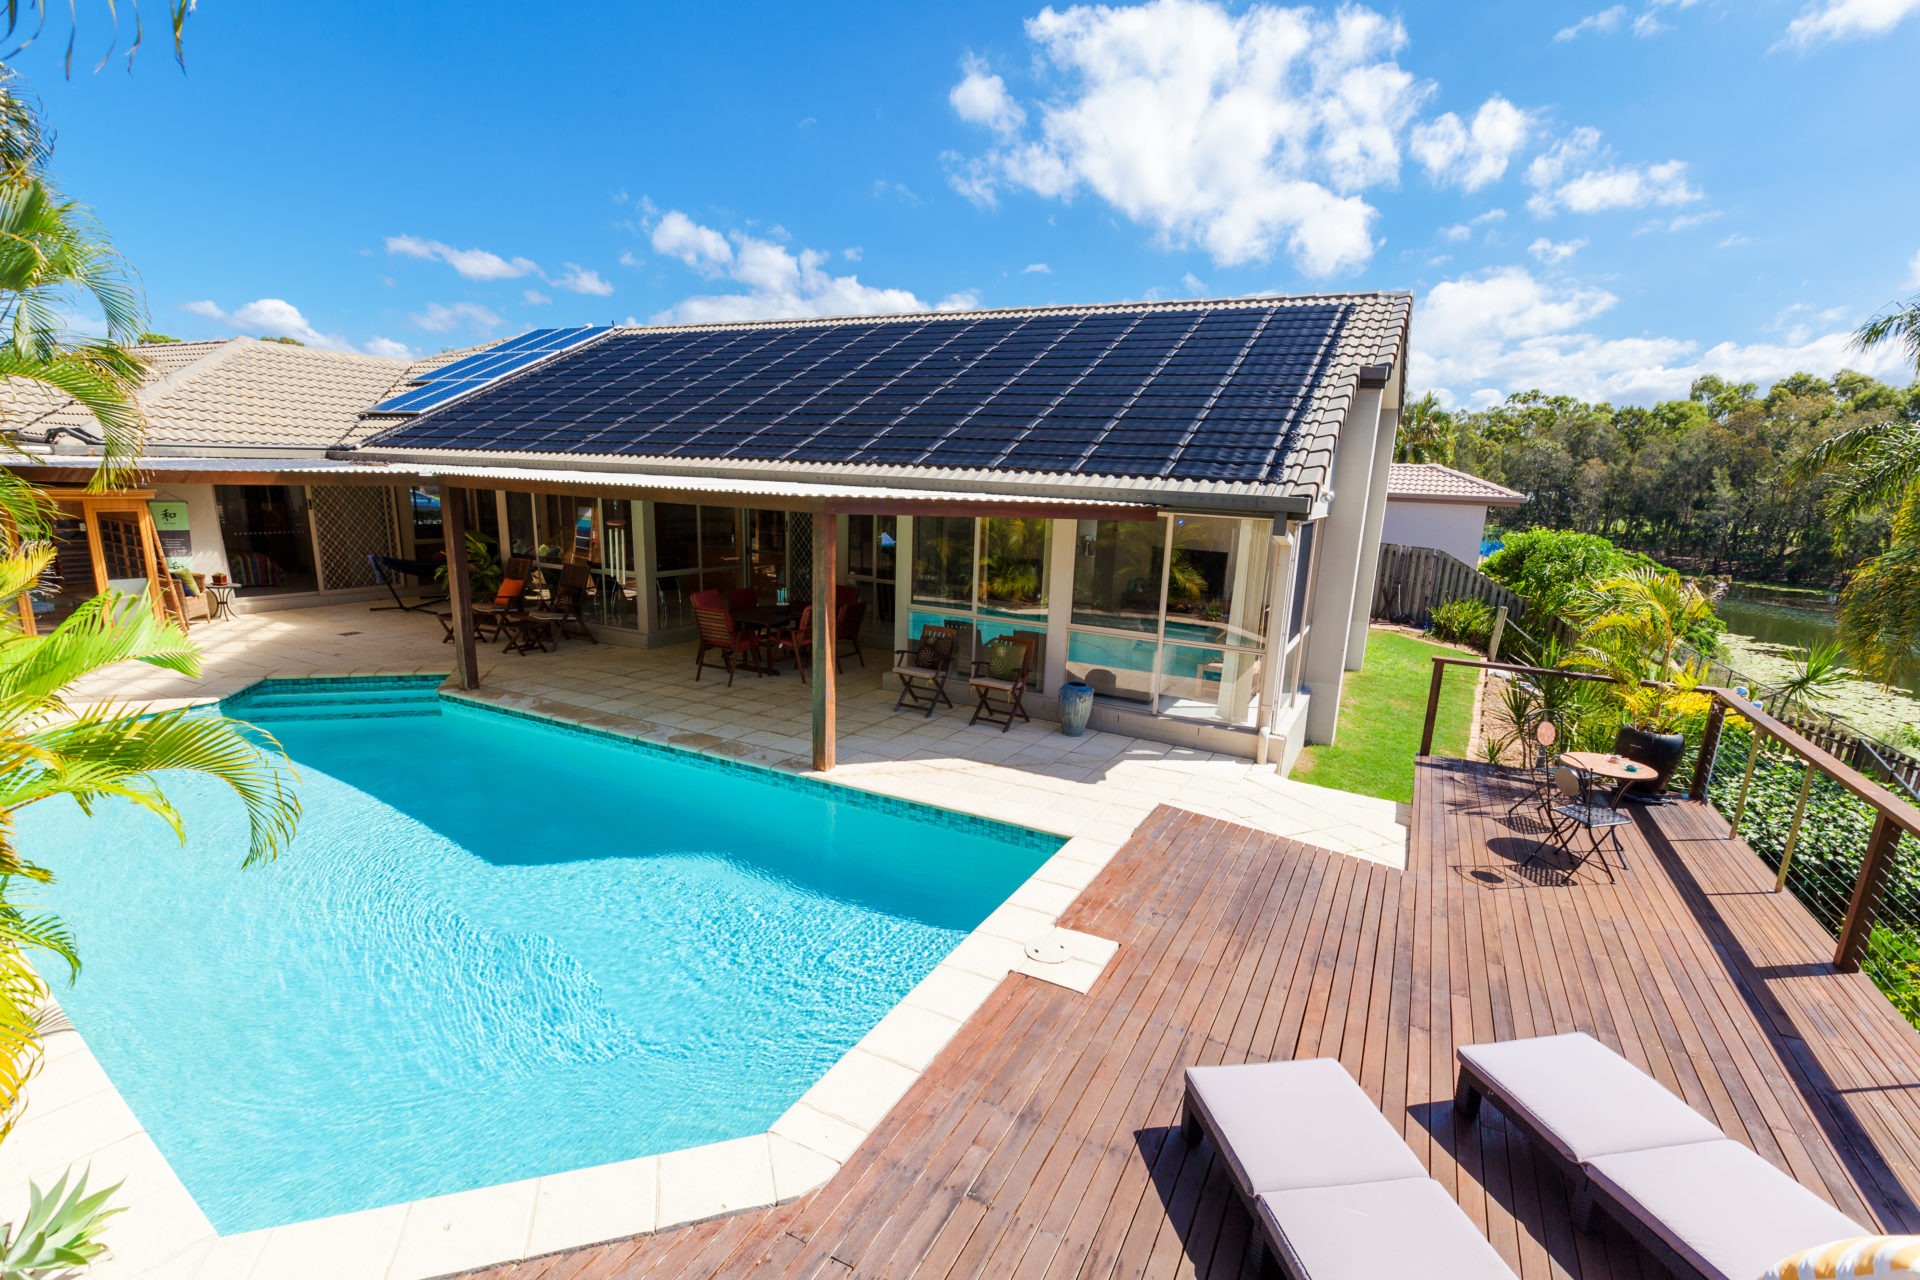 Sunny backyard with solar pool heating